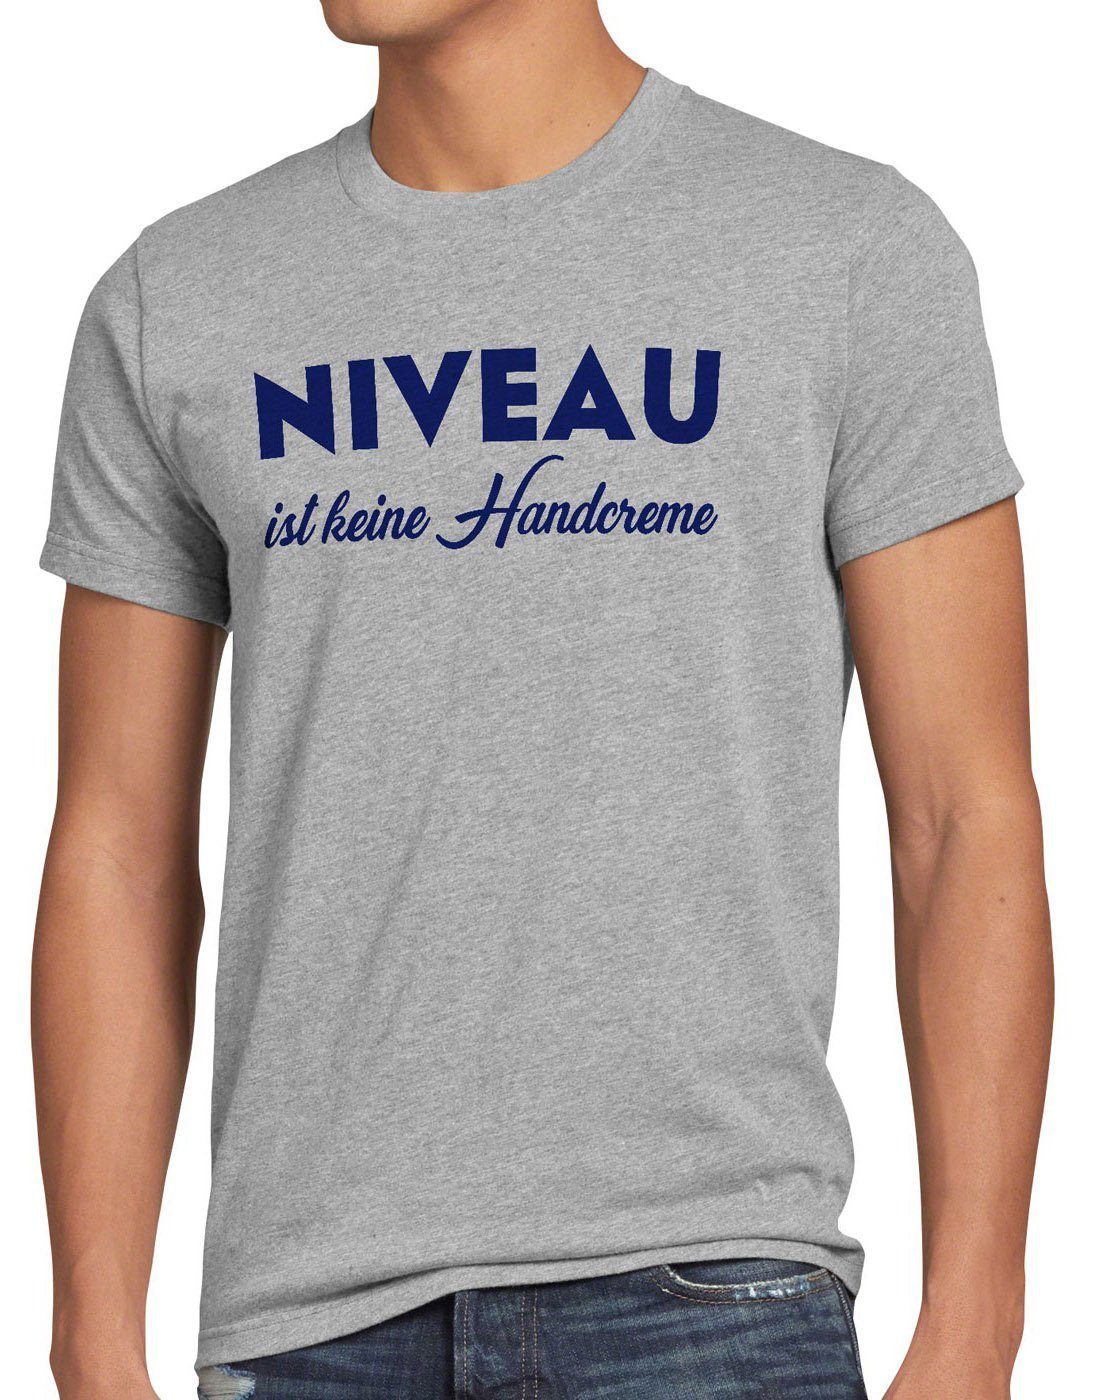 style3 Print-Shirt Funshirt T-Shirt Creme Handcreme lustig meliert Herren fun ist nivea Niveau Spruch grau keine